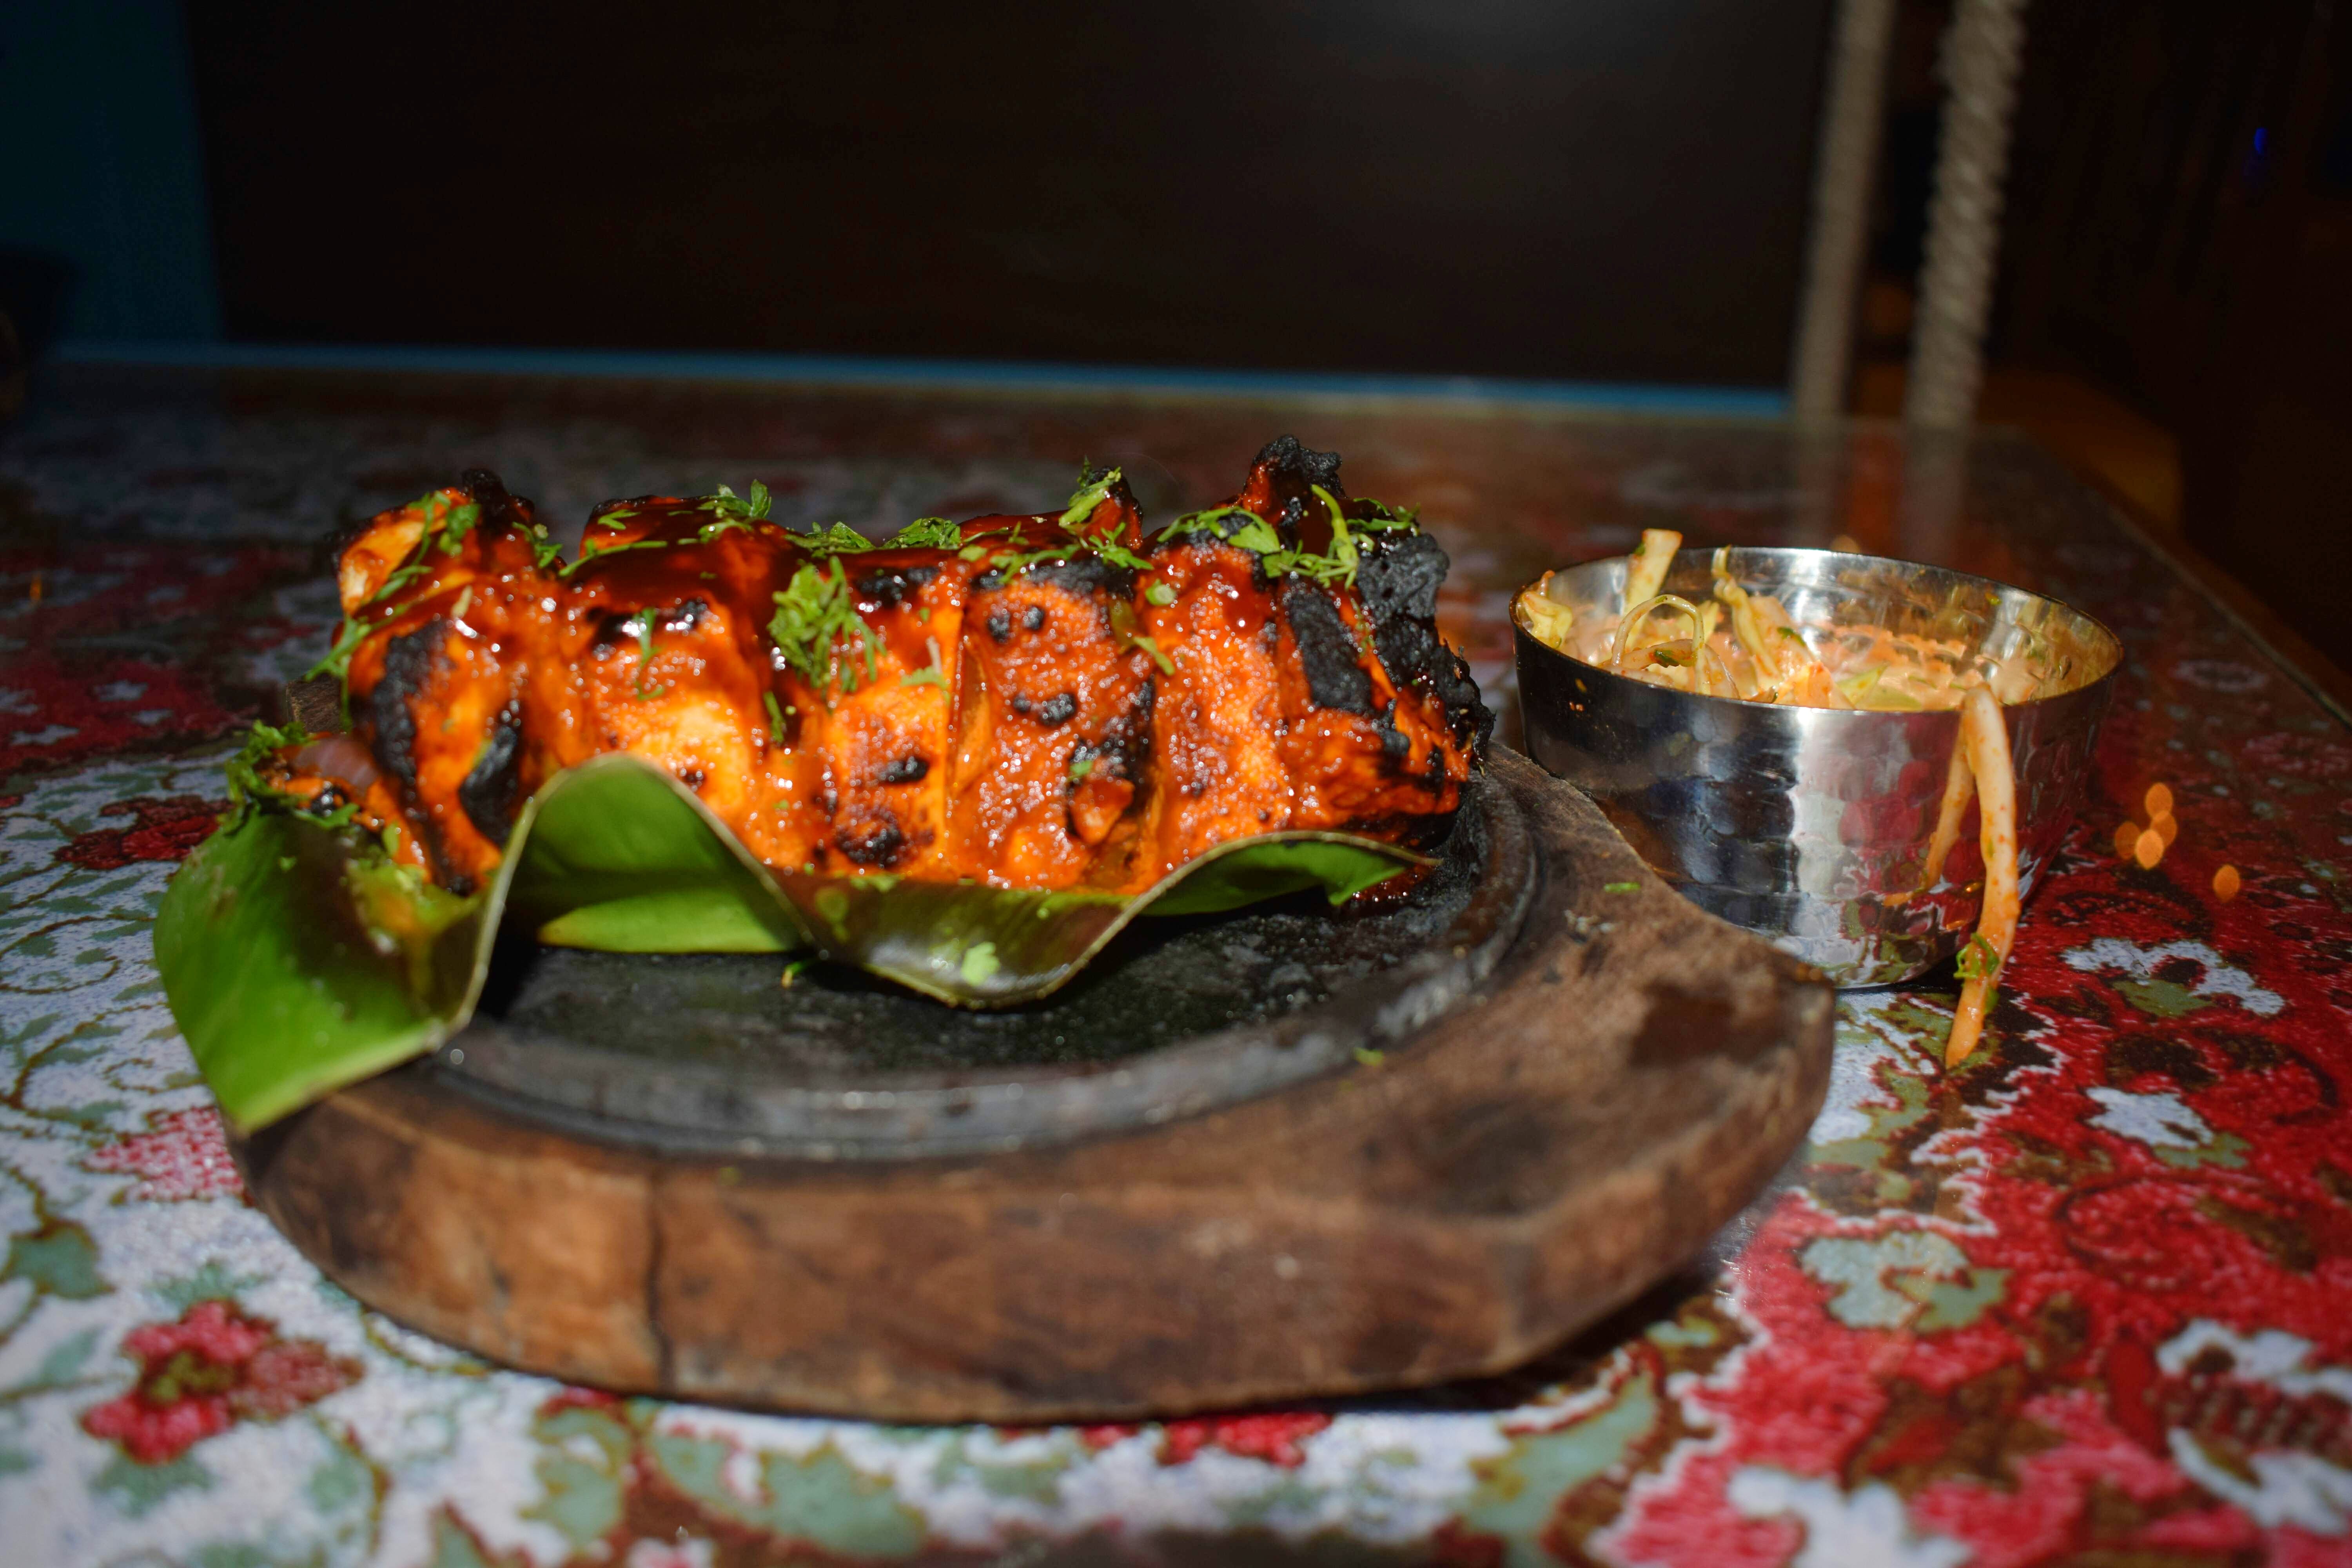 Food,Cuisine,Dish,Ingredient,Recipe,Tandoori chicken,Roasting,Meat,Meal,Pakistani cuisine